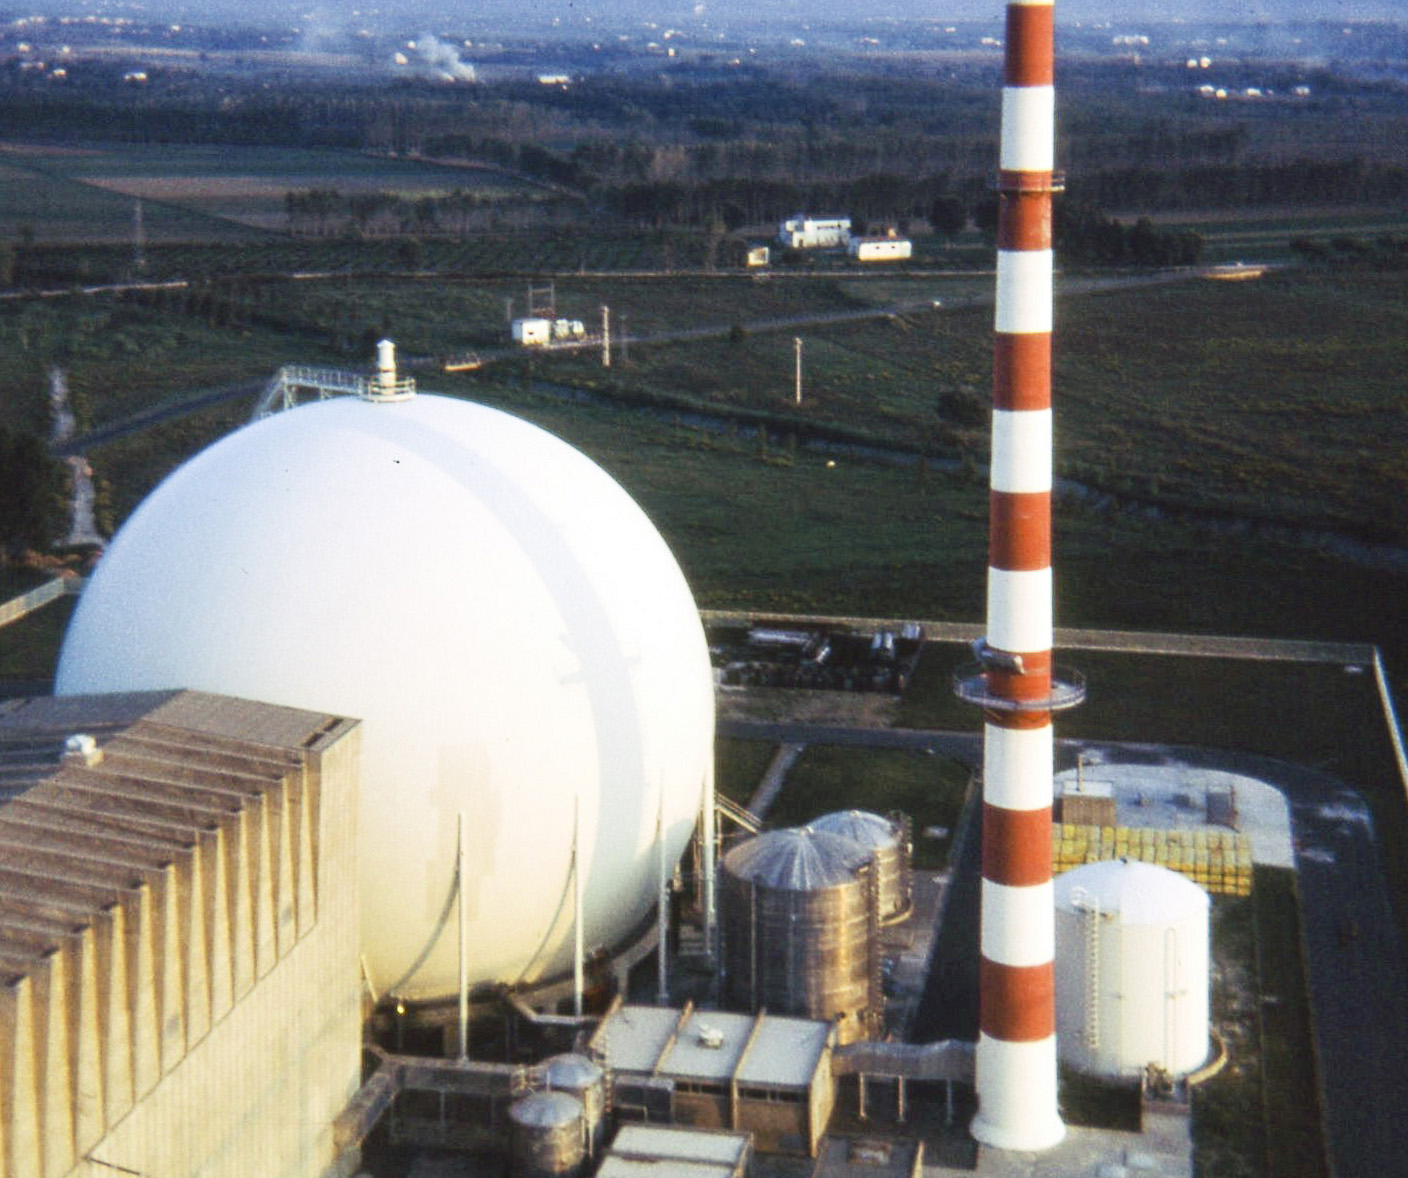 garigliano-centrale-nucleare-recovery-plan